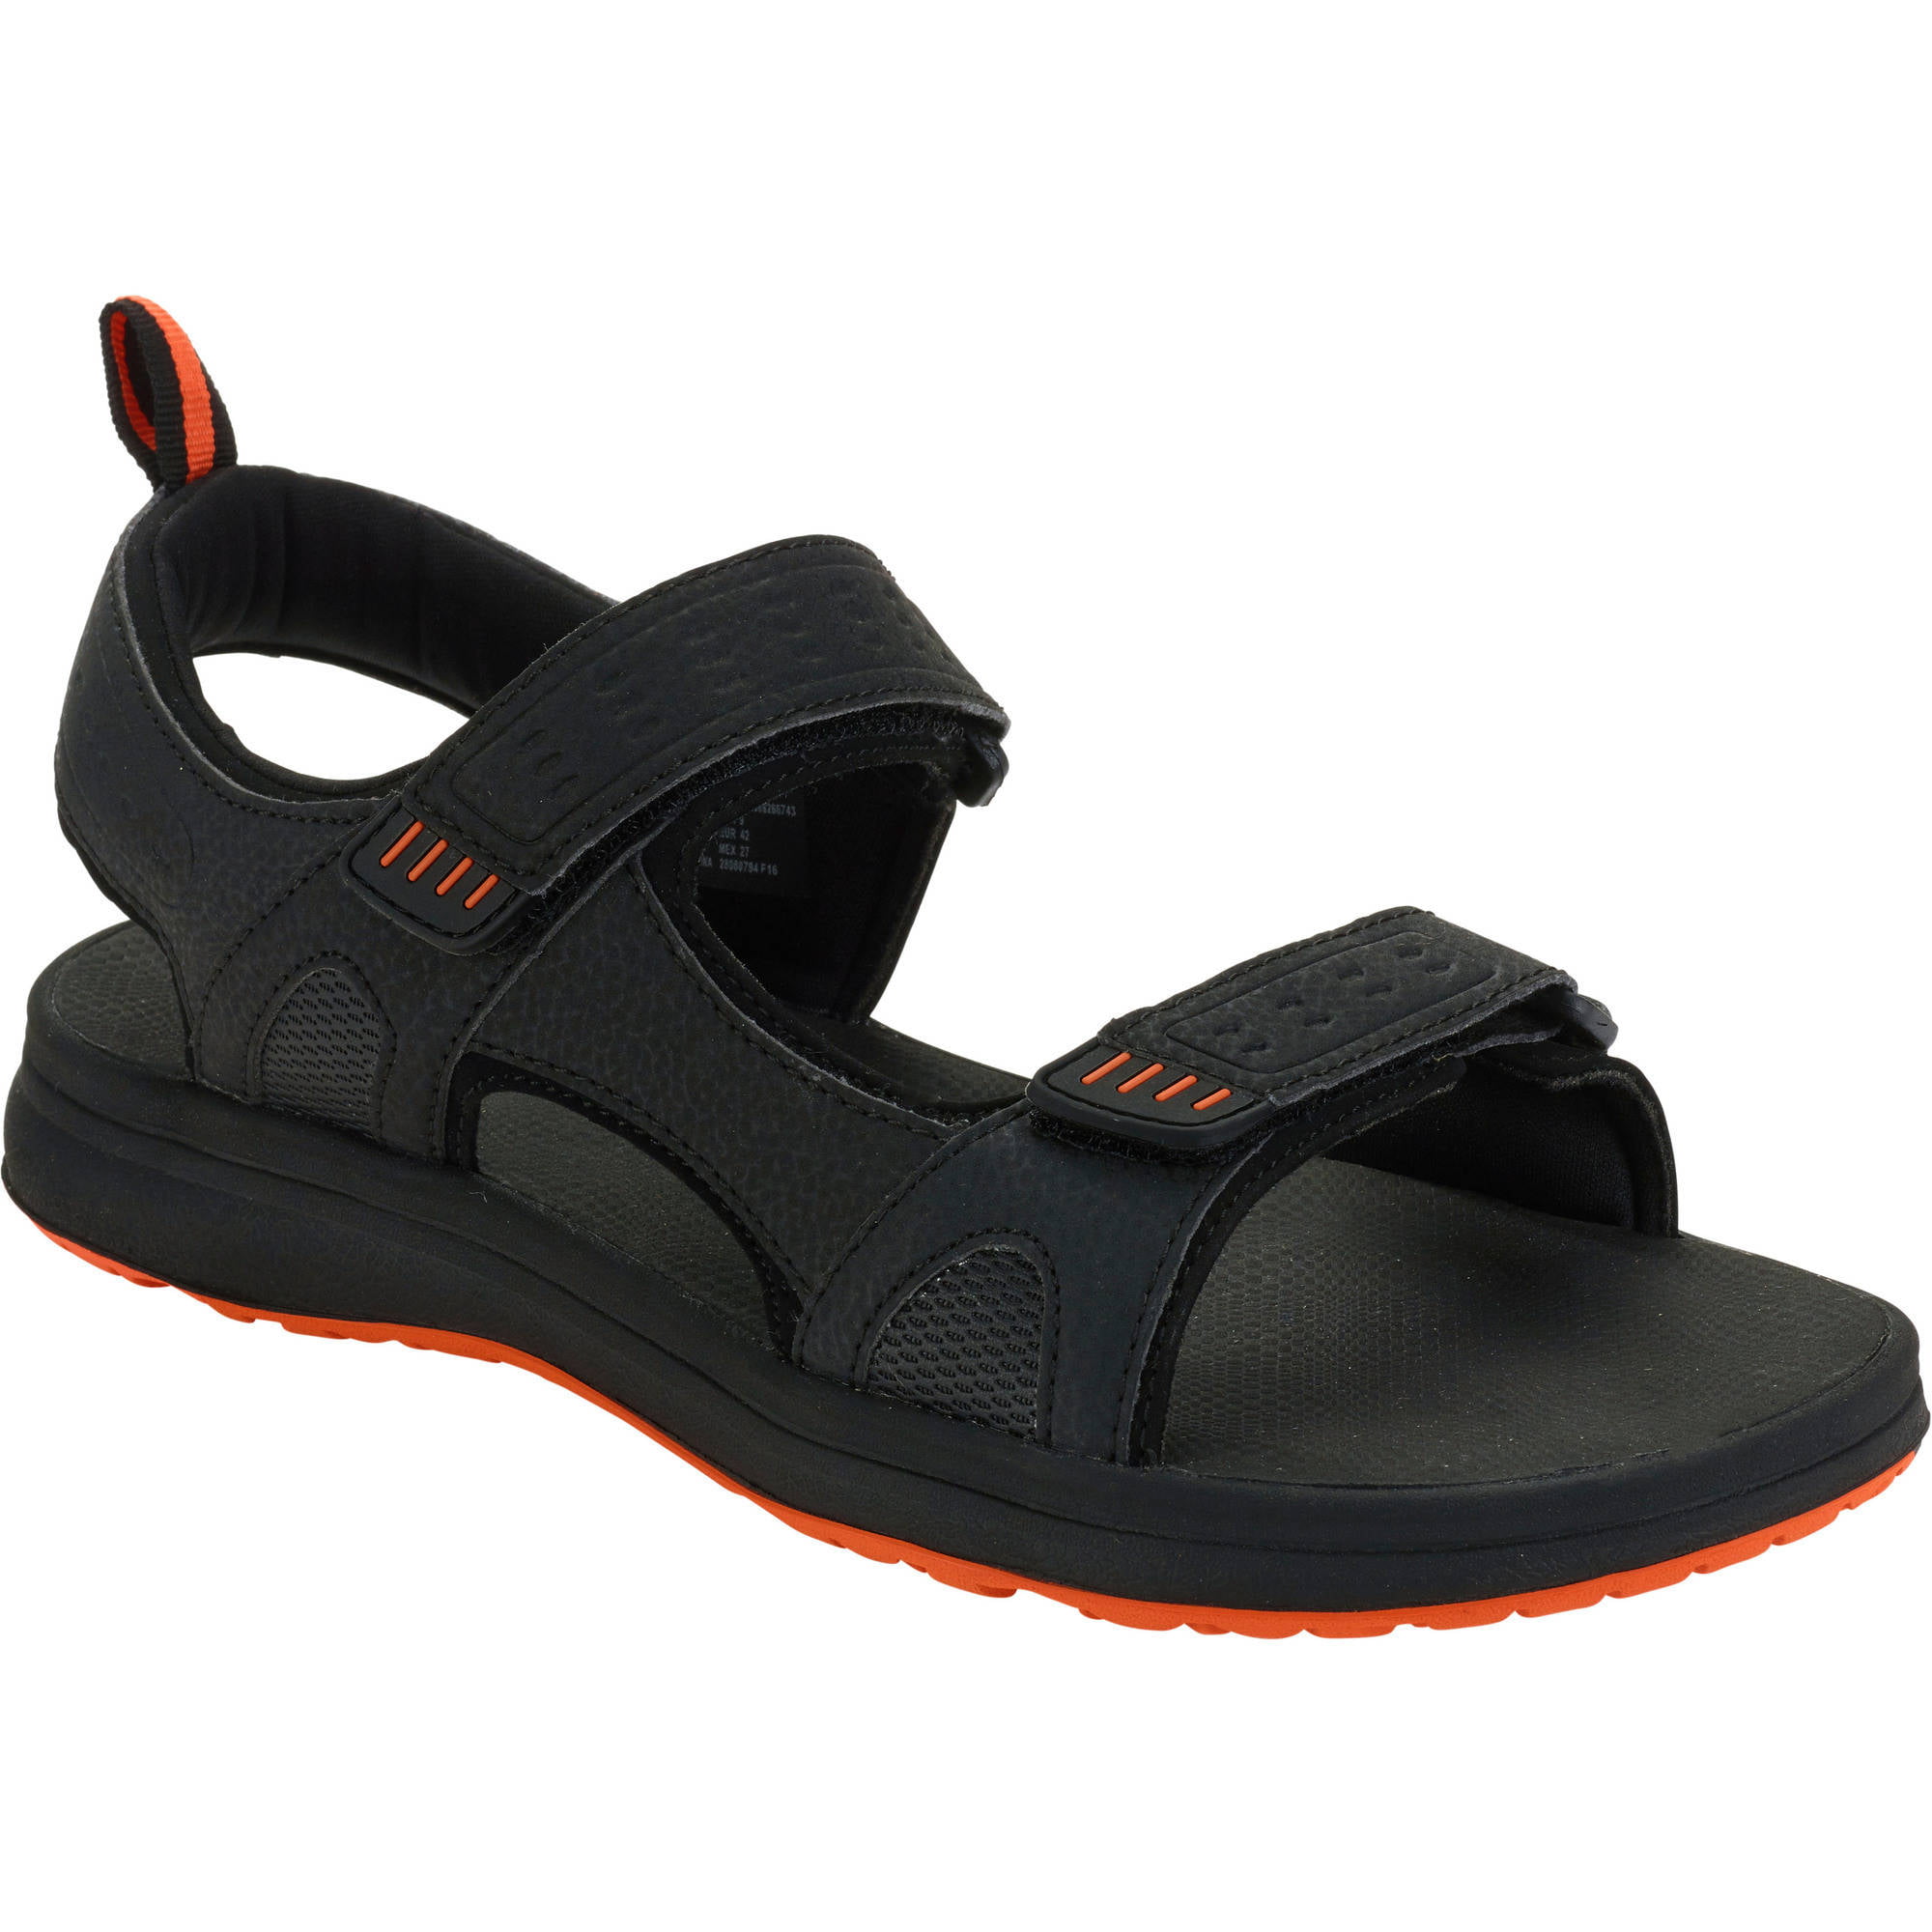 OT Mens Sport Sandal Running Adjustable Shoes Black Free Shipping Adult ...